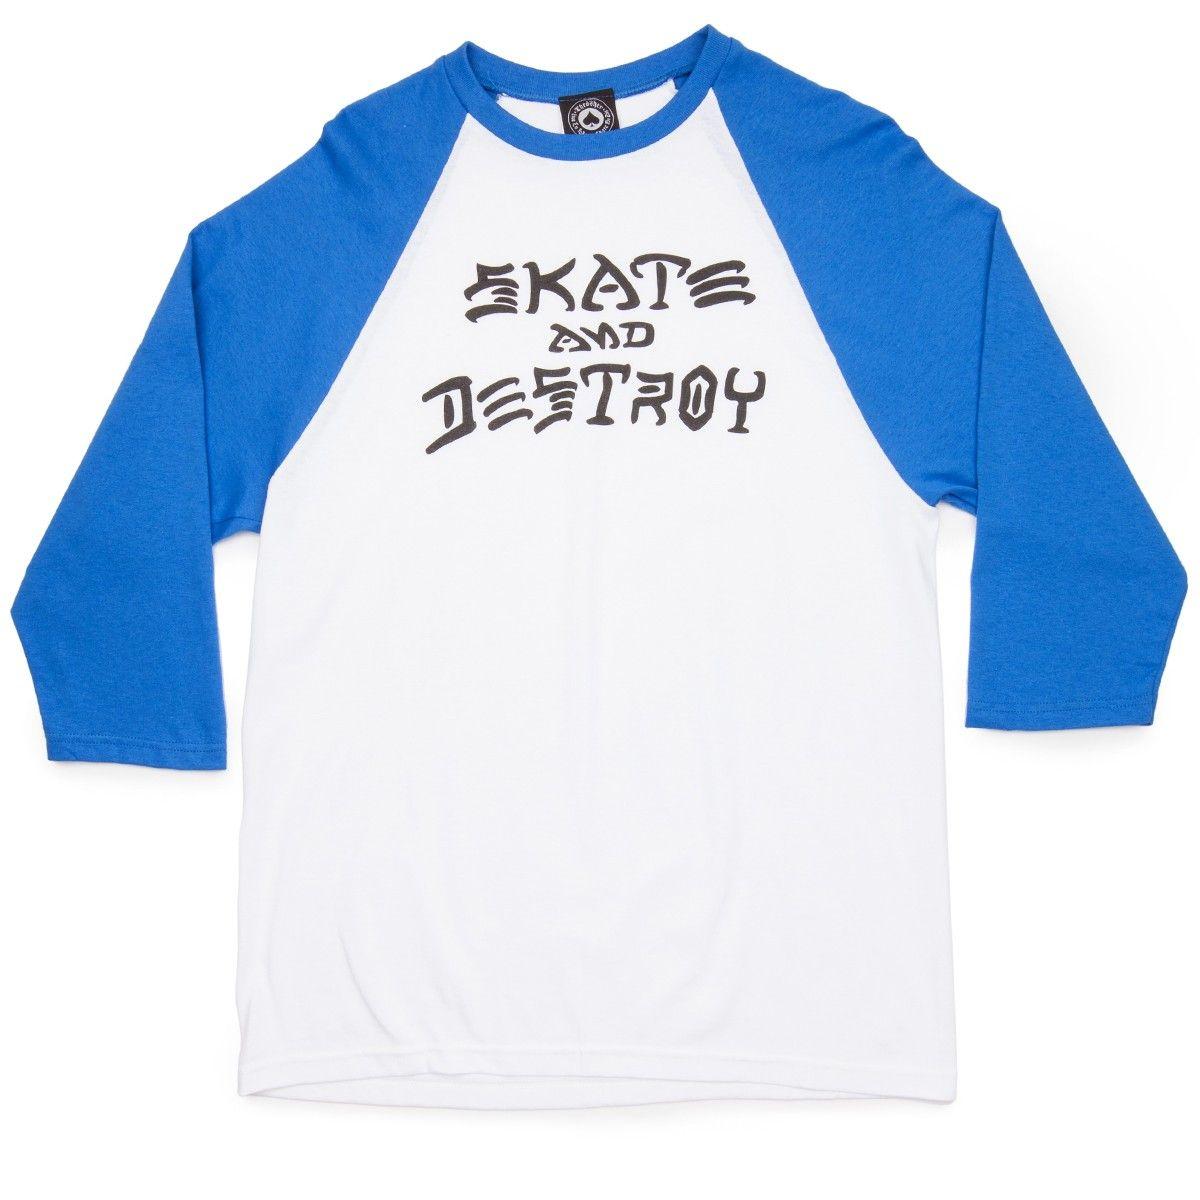 Whit and Blue Thrasher Logo - Thrasher Skate And Destoy Raglan T Shirt